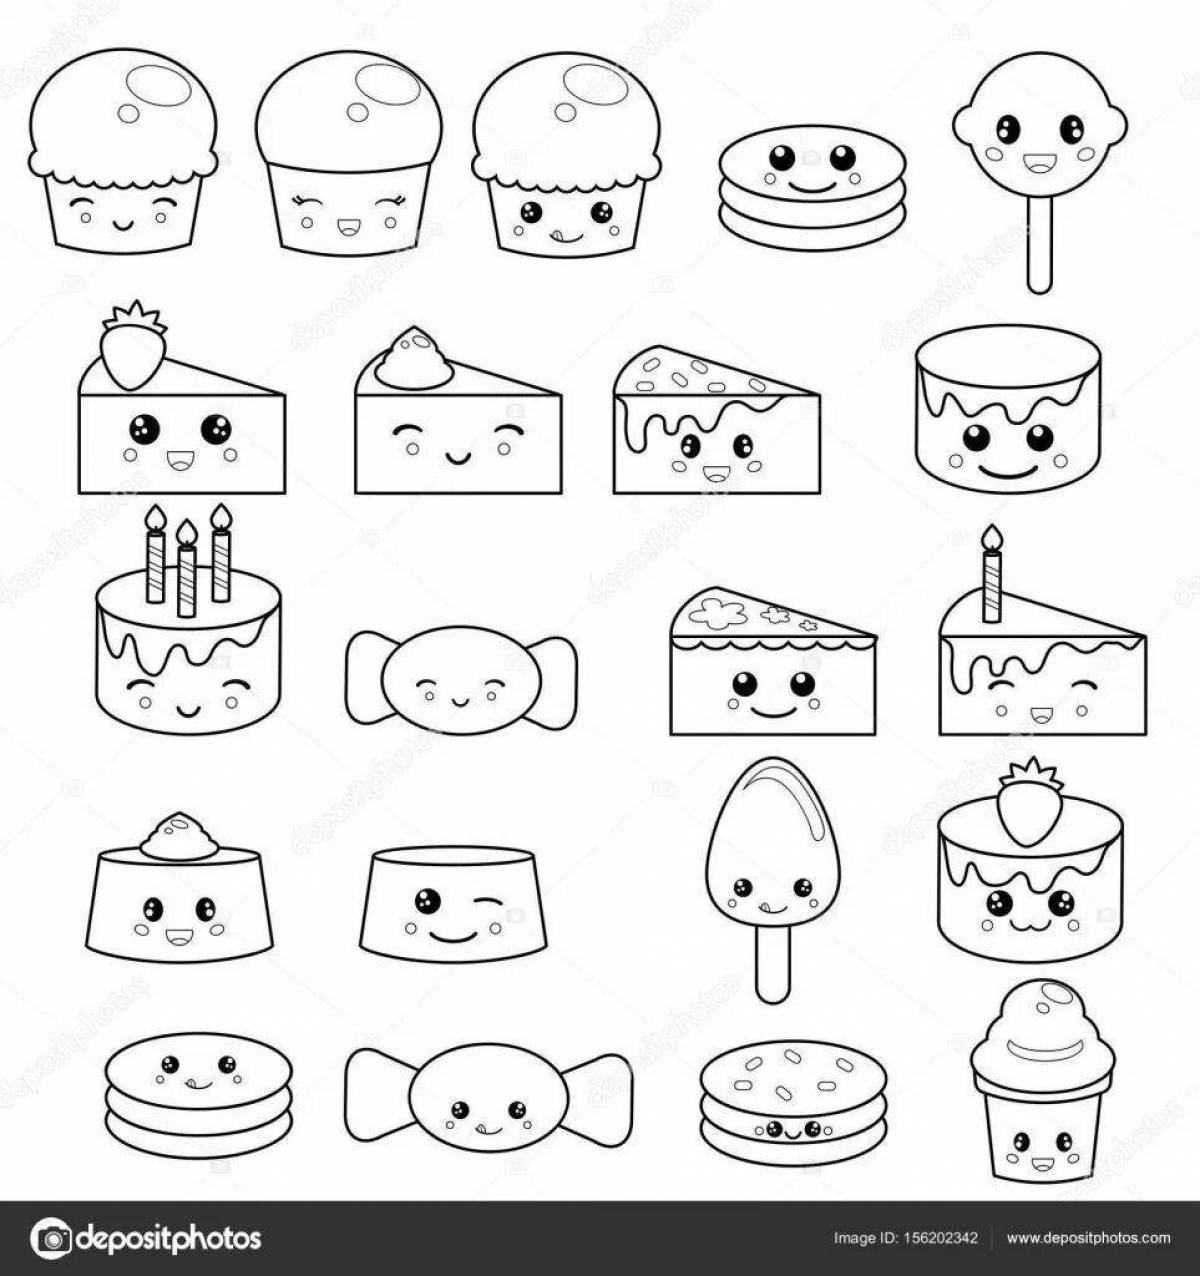 Playful kawaii food coloring page